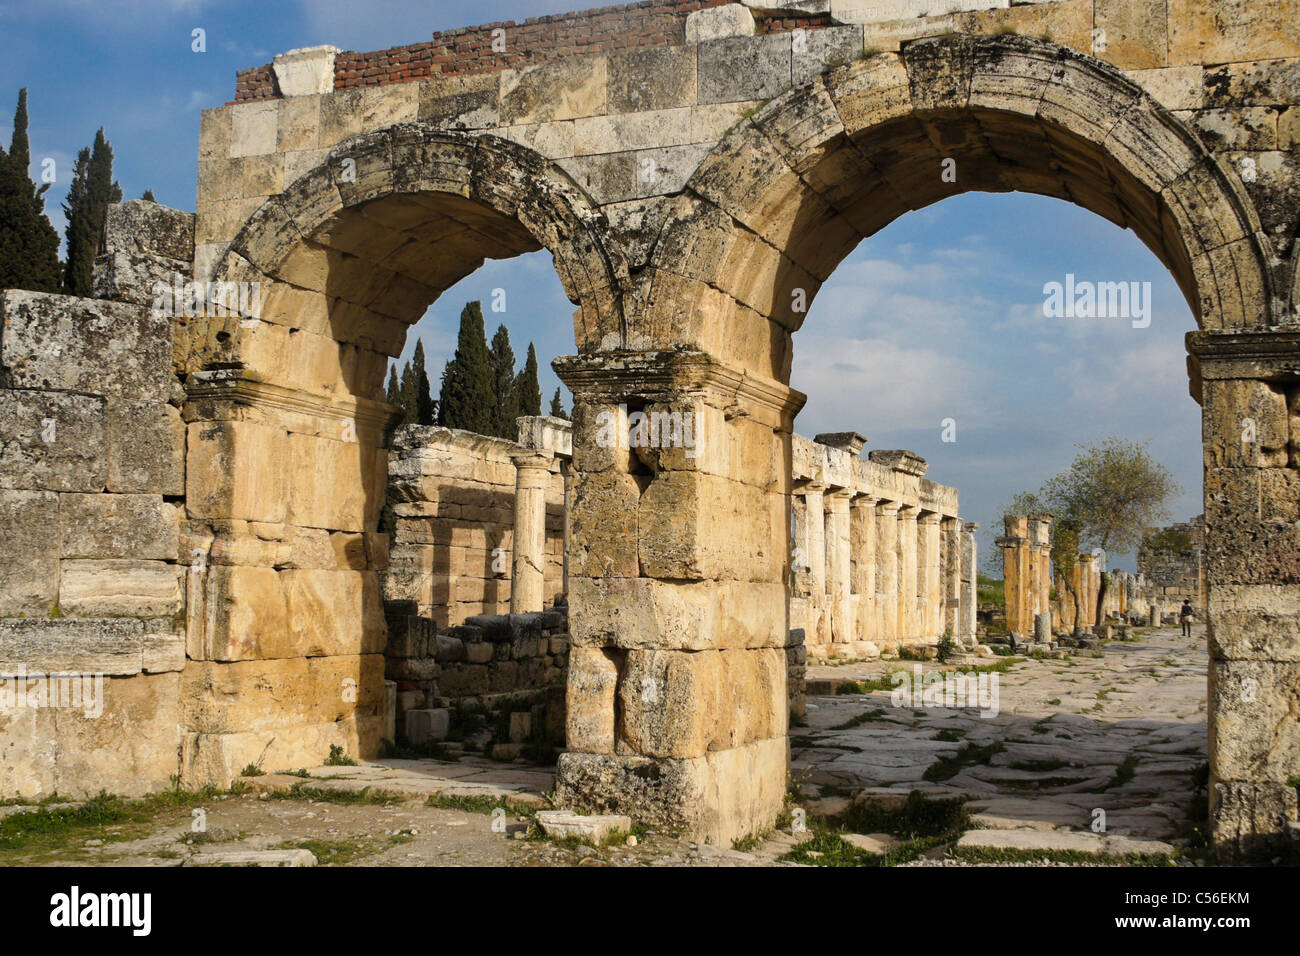 Ruines romaines de Hierapolis-Pamukkale, Turquie Banque D'Images